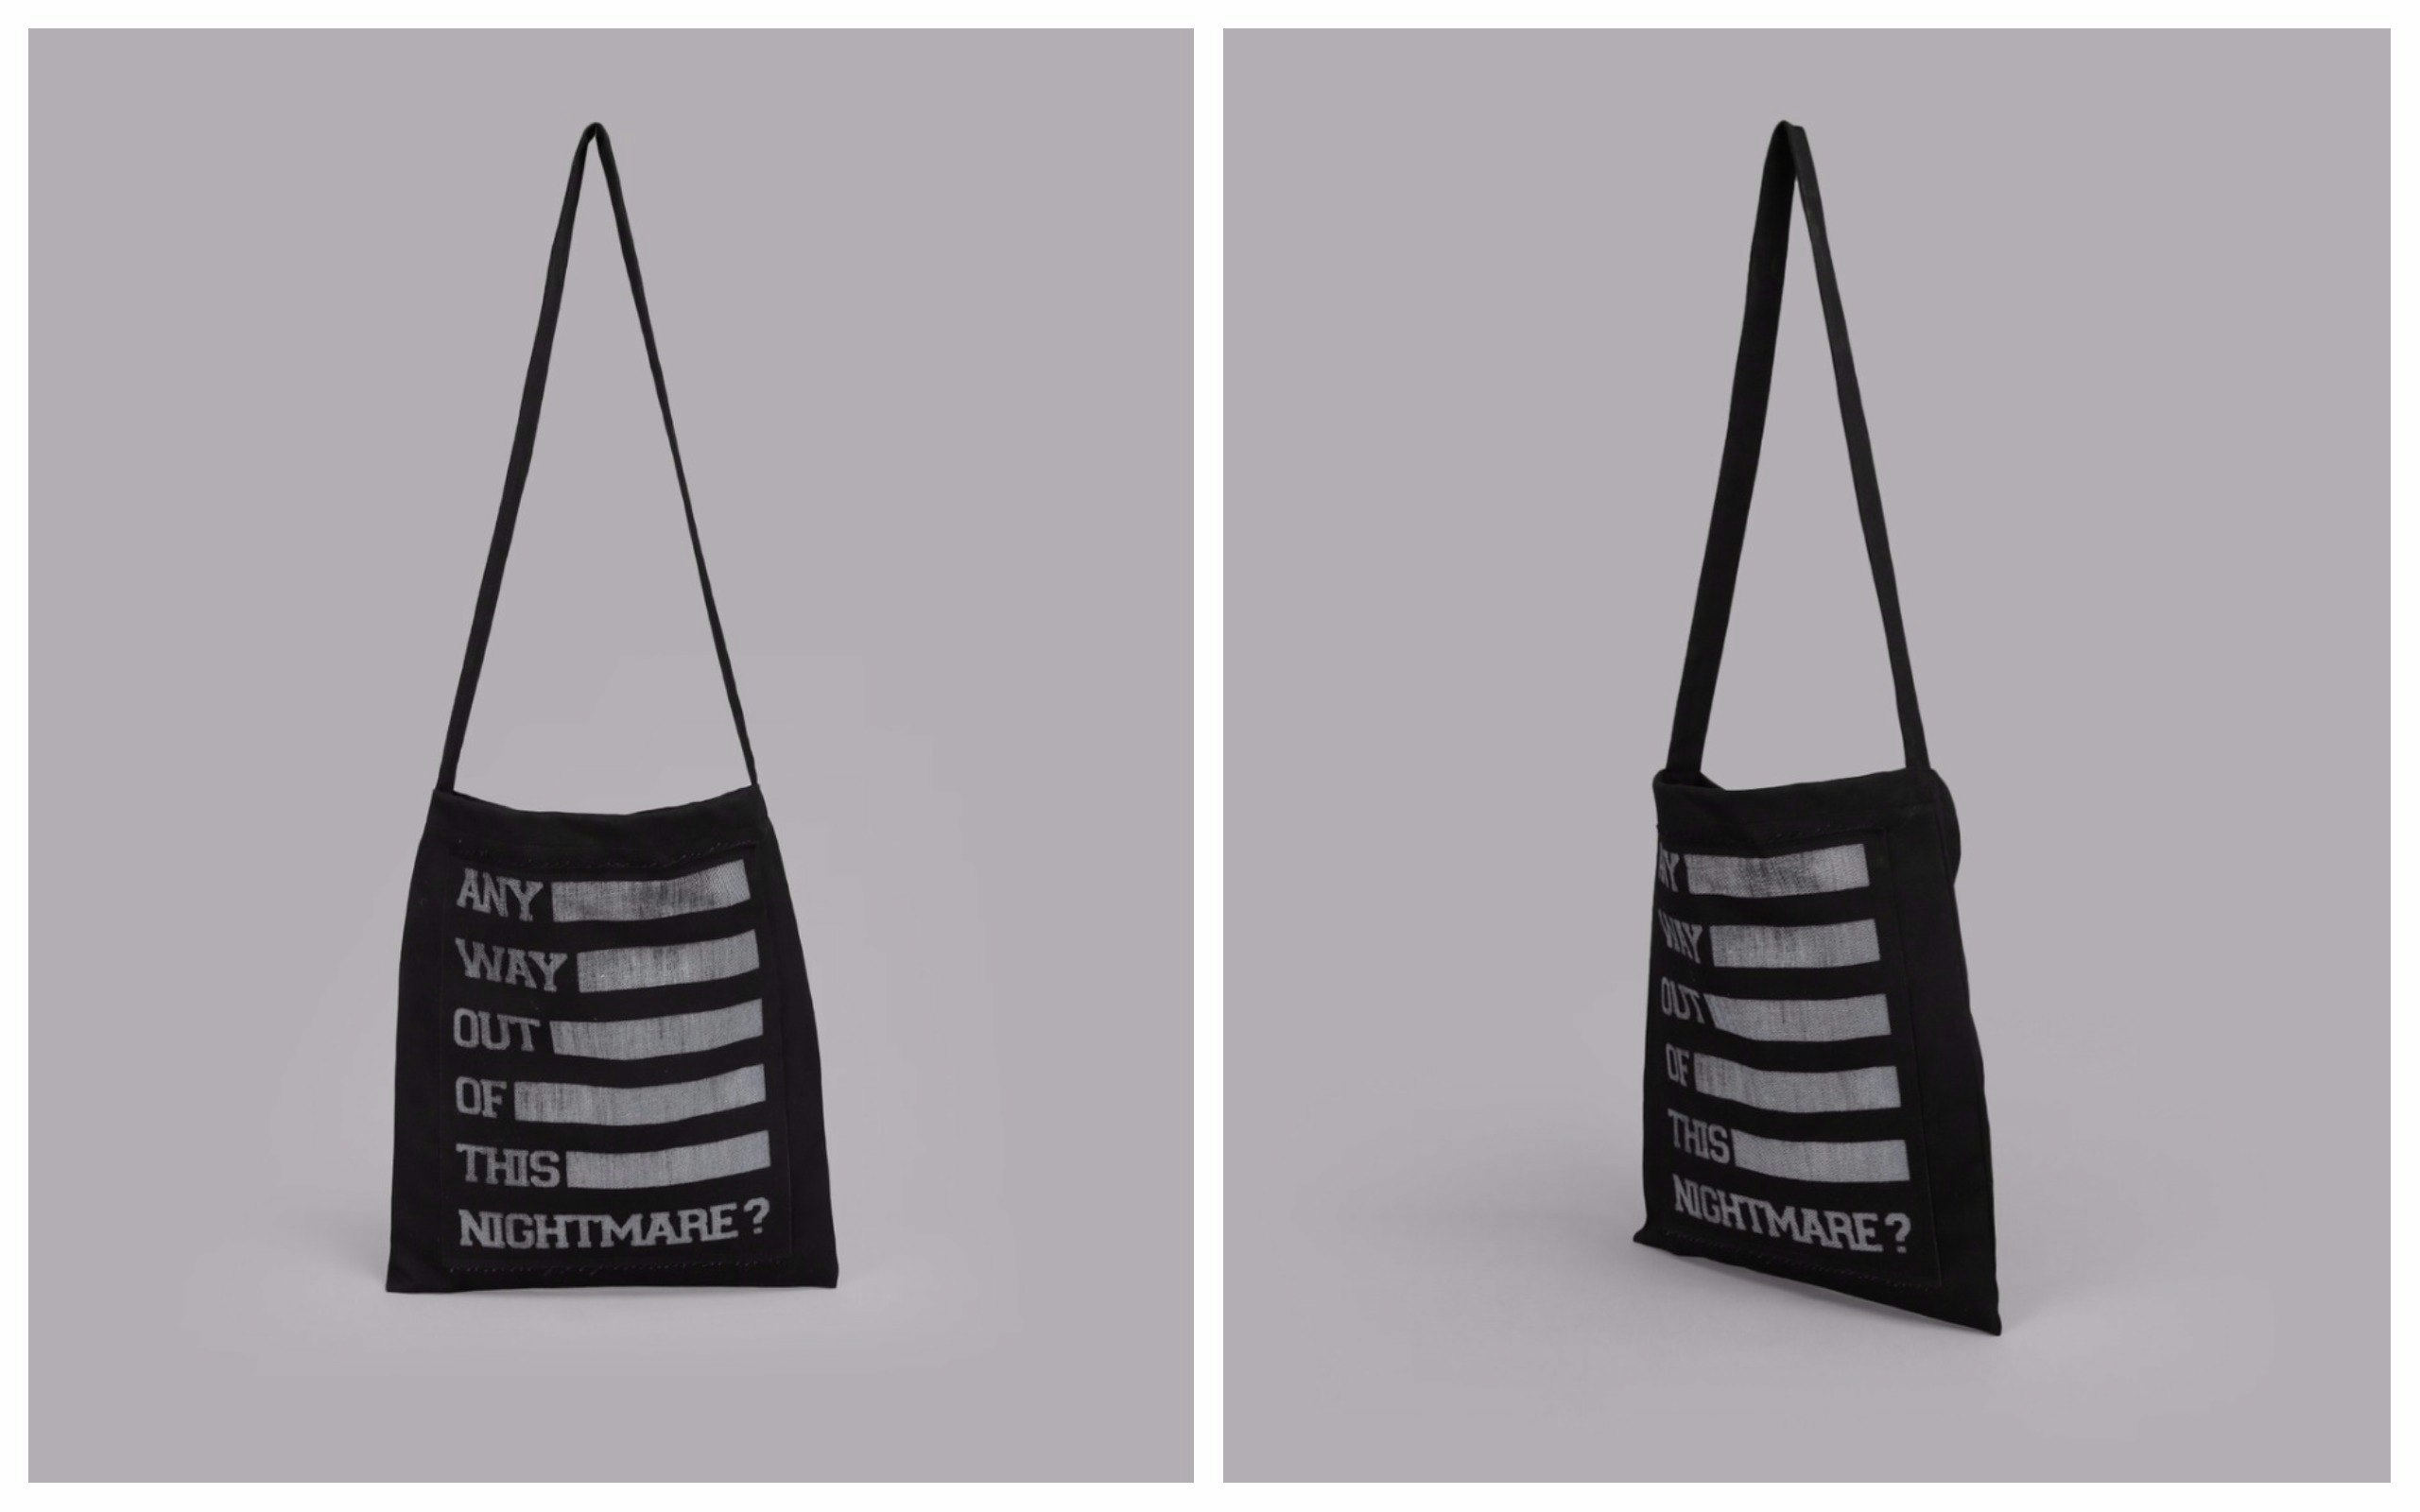 Gigi Hadid Wore the Tote Bag Trend at New York Fashion Week